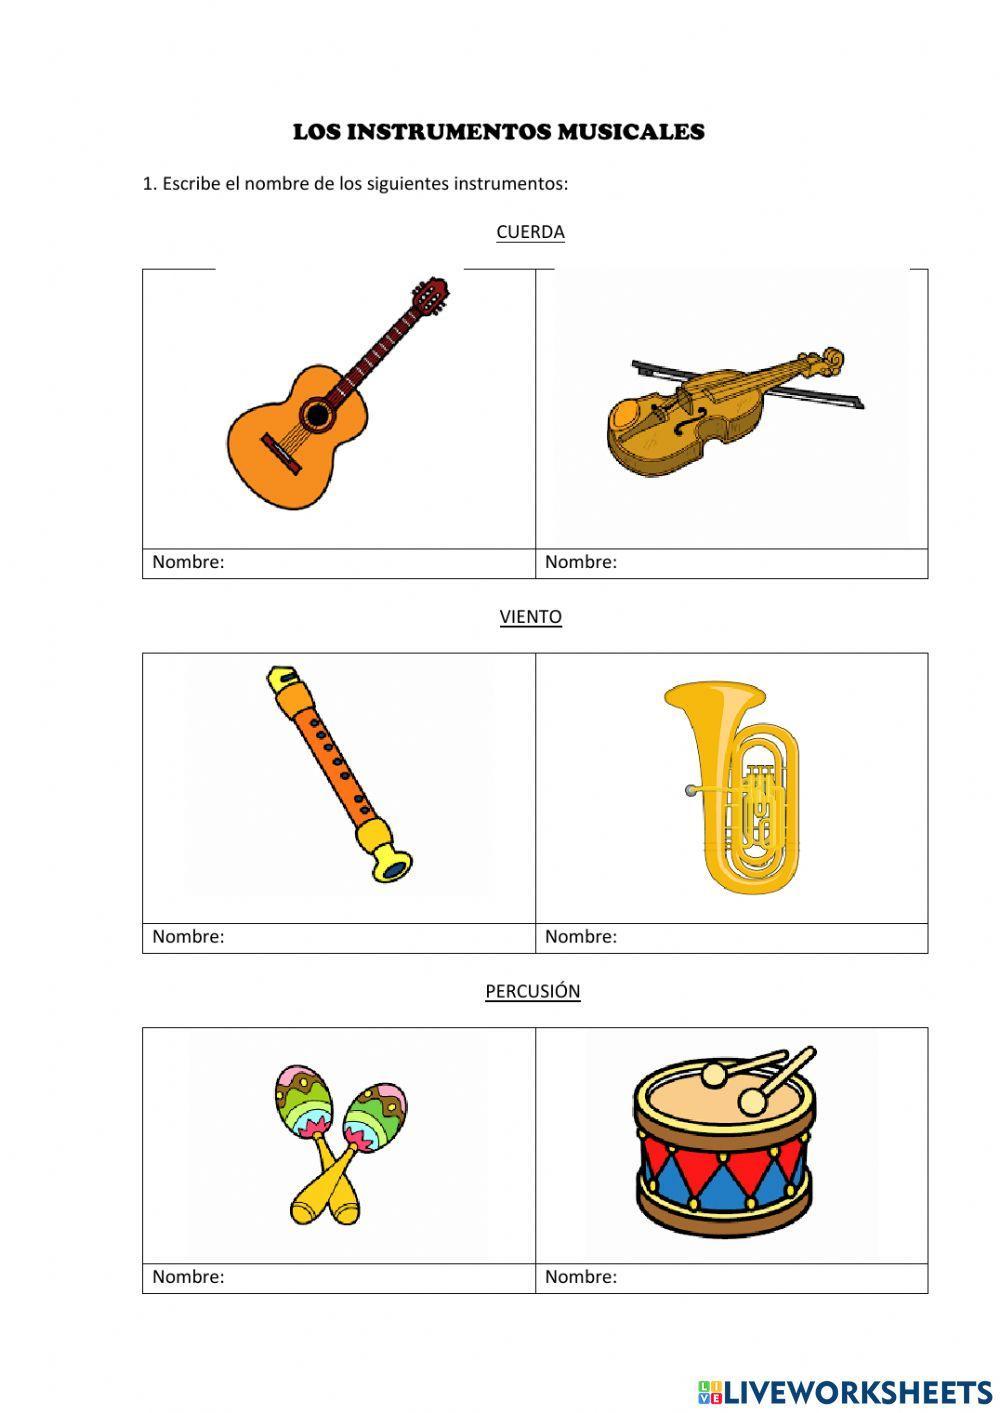 Los instrumentos musicales interactive activity for Infantil | Live  Worksheets